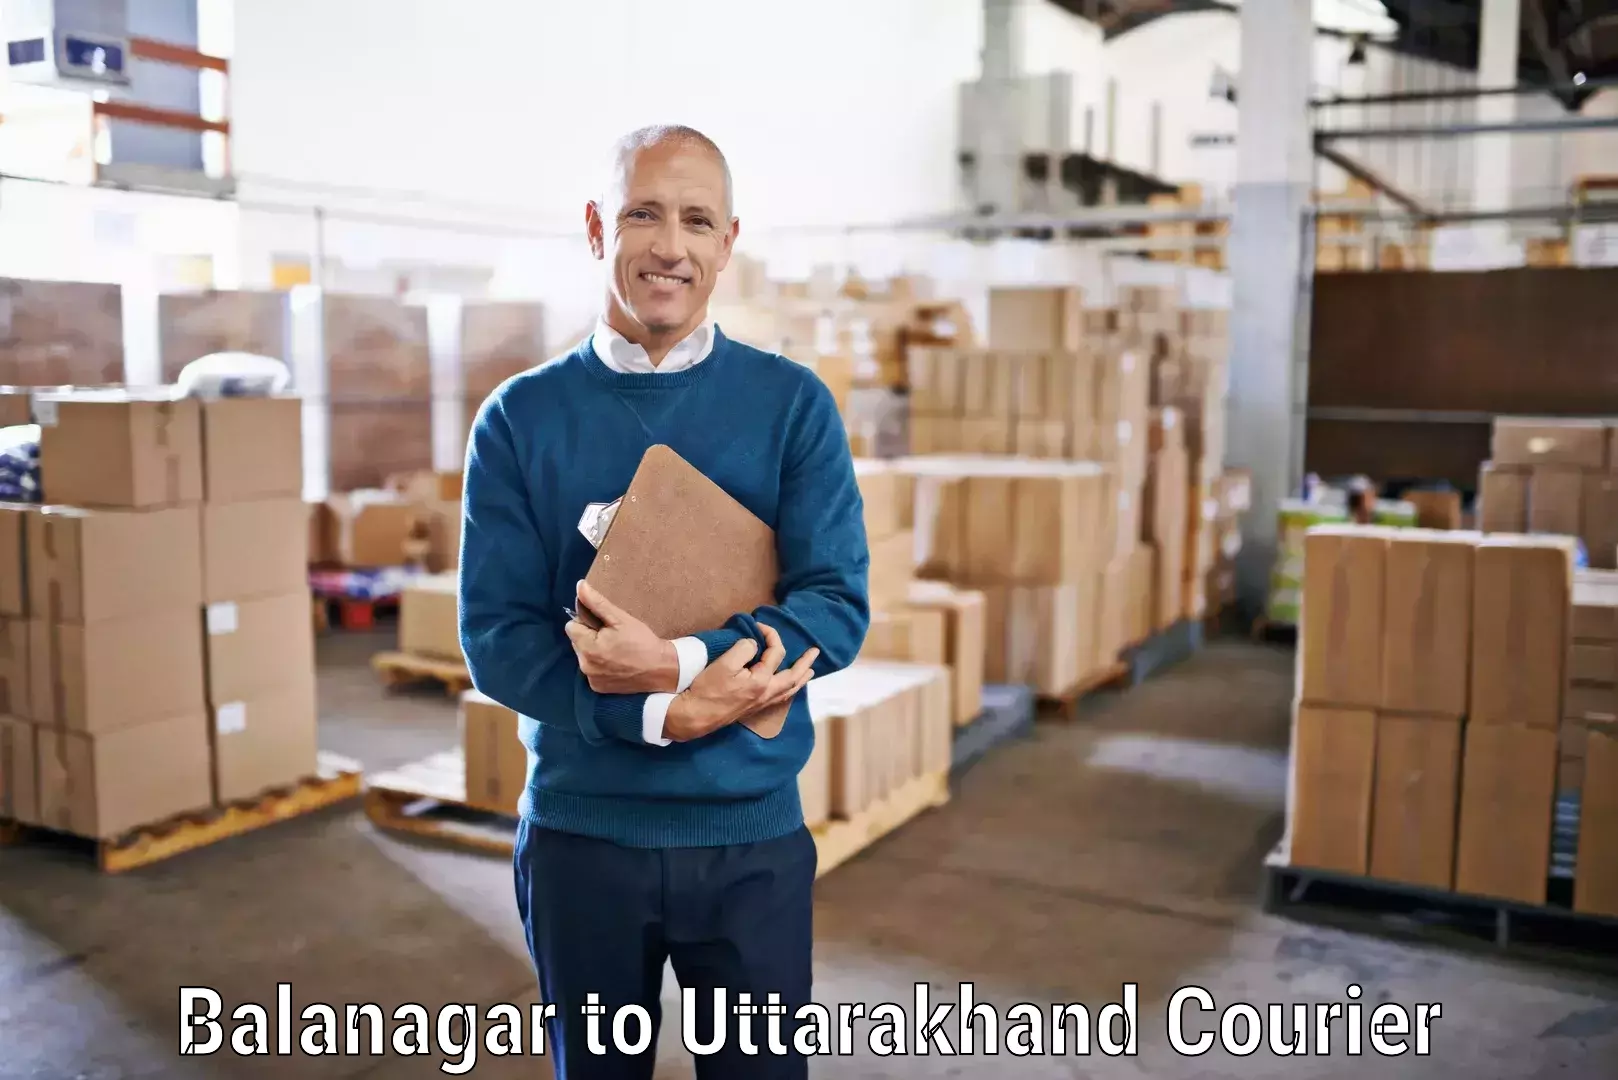 Nationwide delivery network Balanagar to Almora